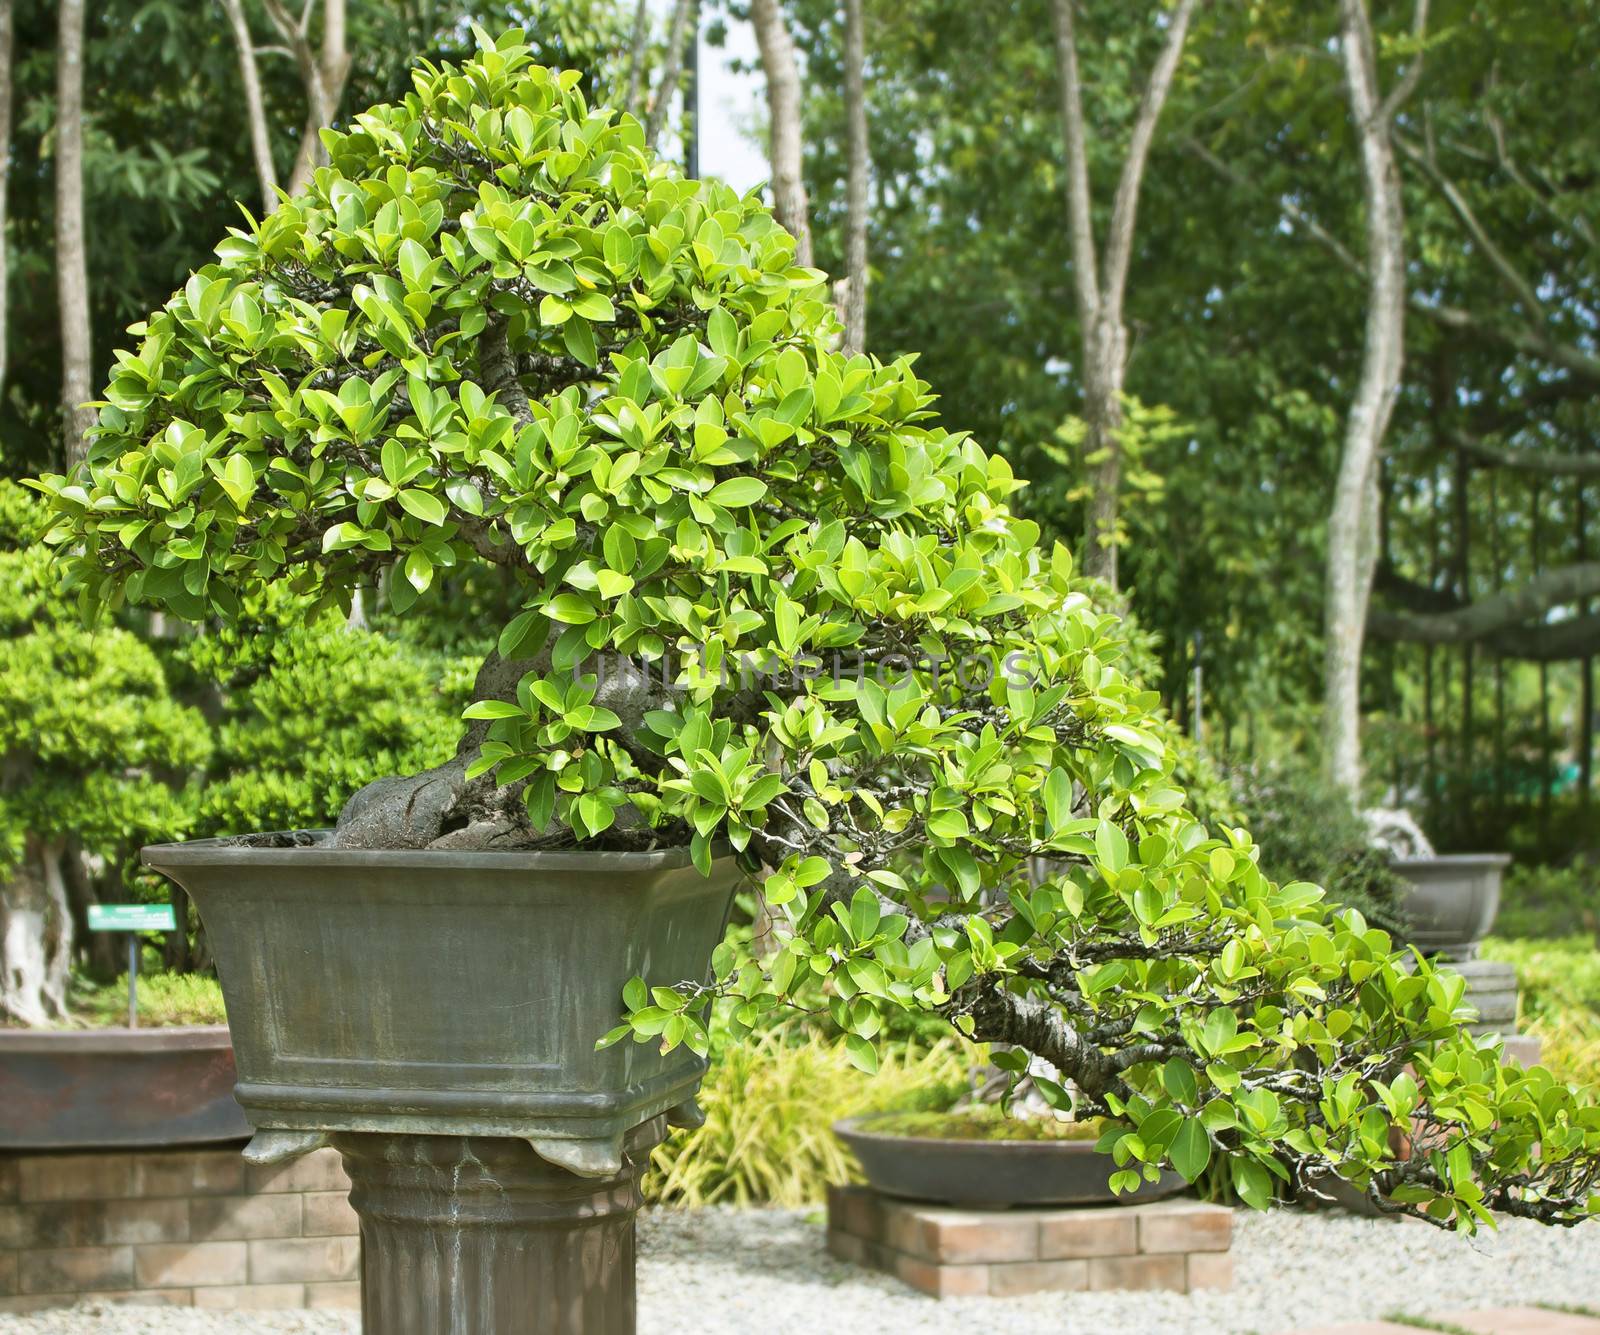 Bonsai trees, small shrubs, greenery in pots.